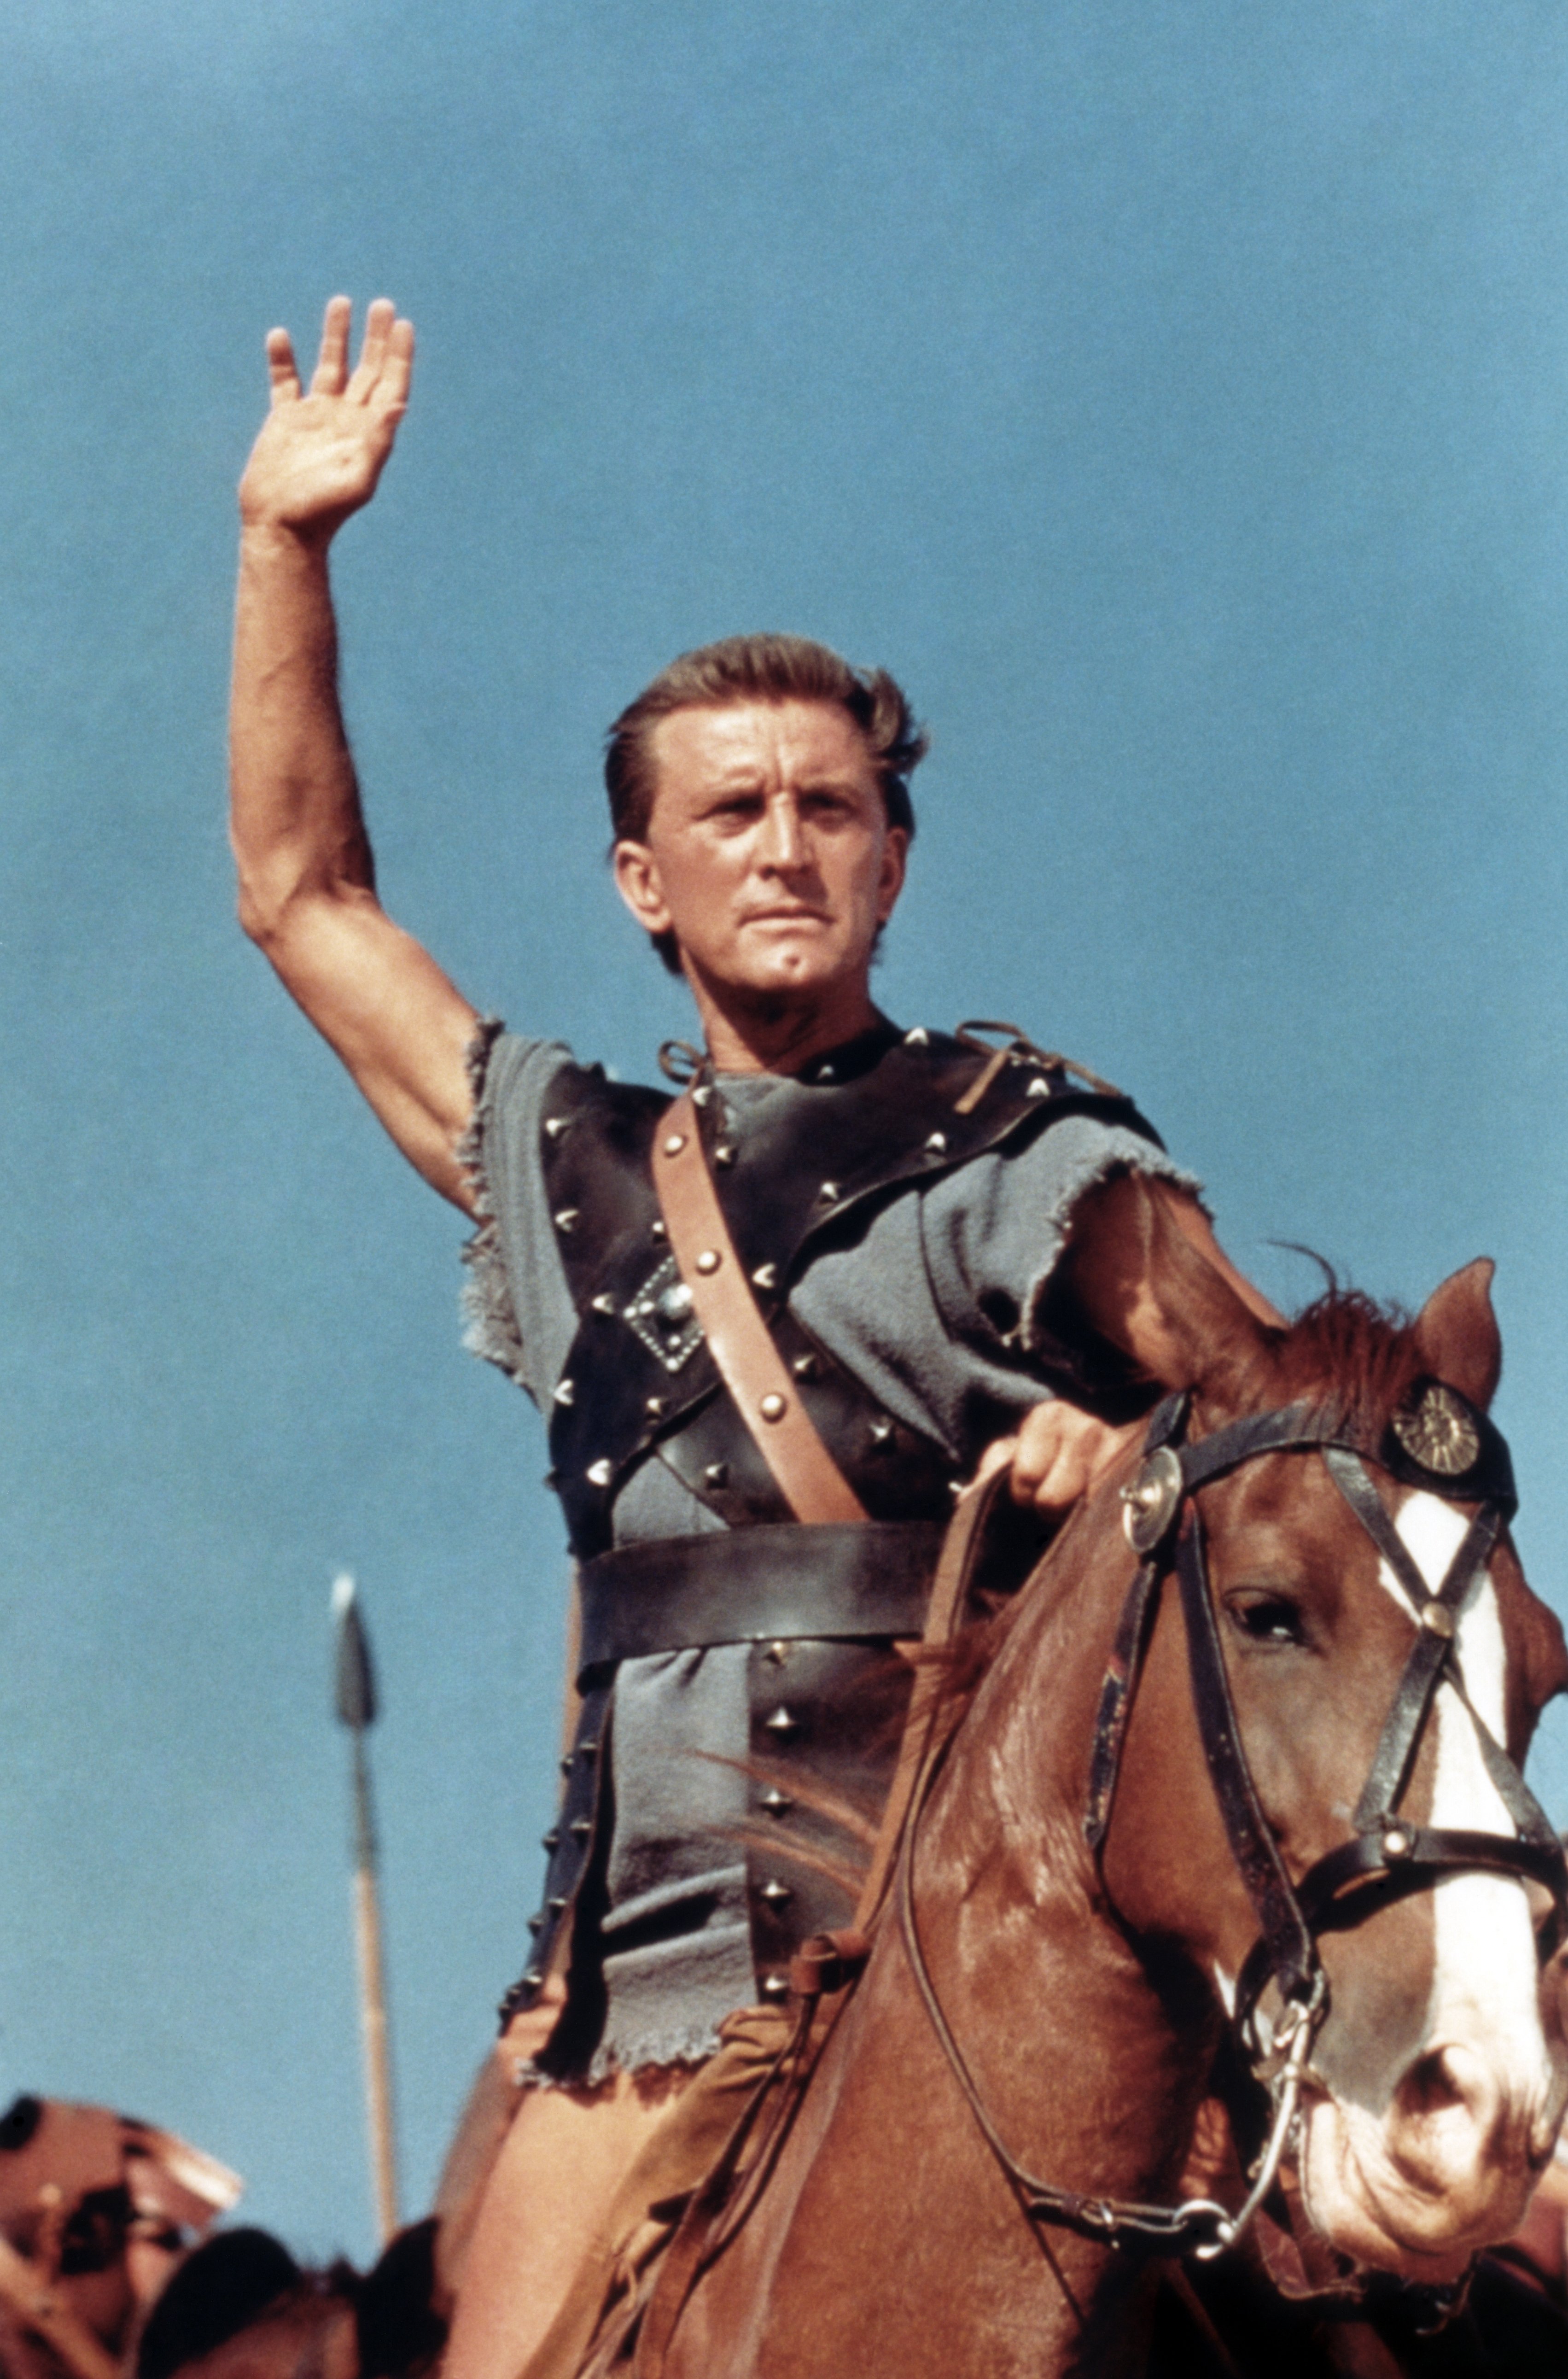 Kirk Douglas en "Spartacus", 1960. | Foto: Getty Images